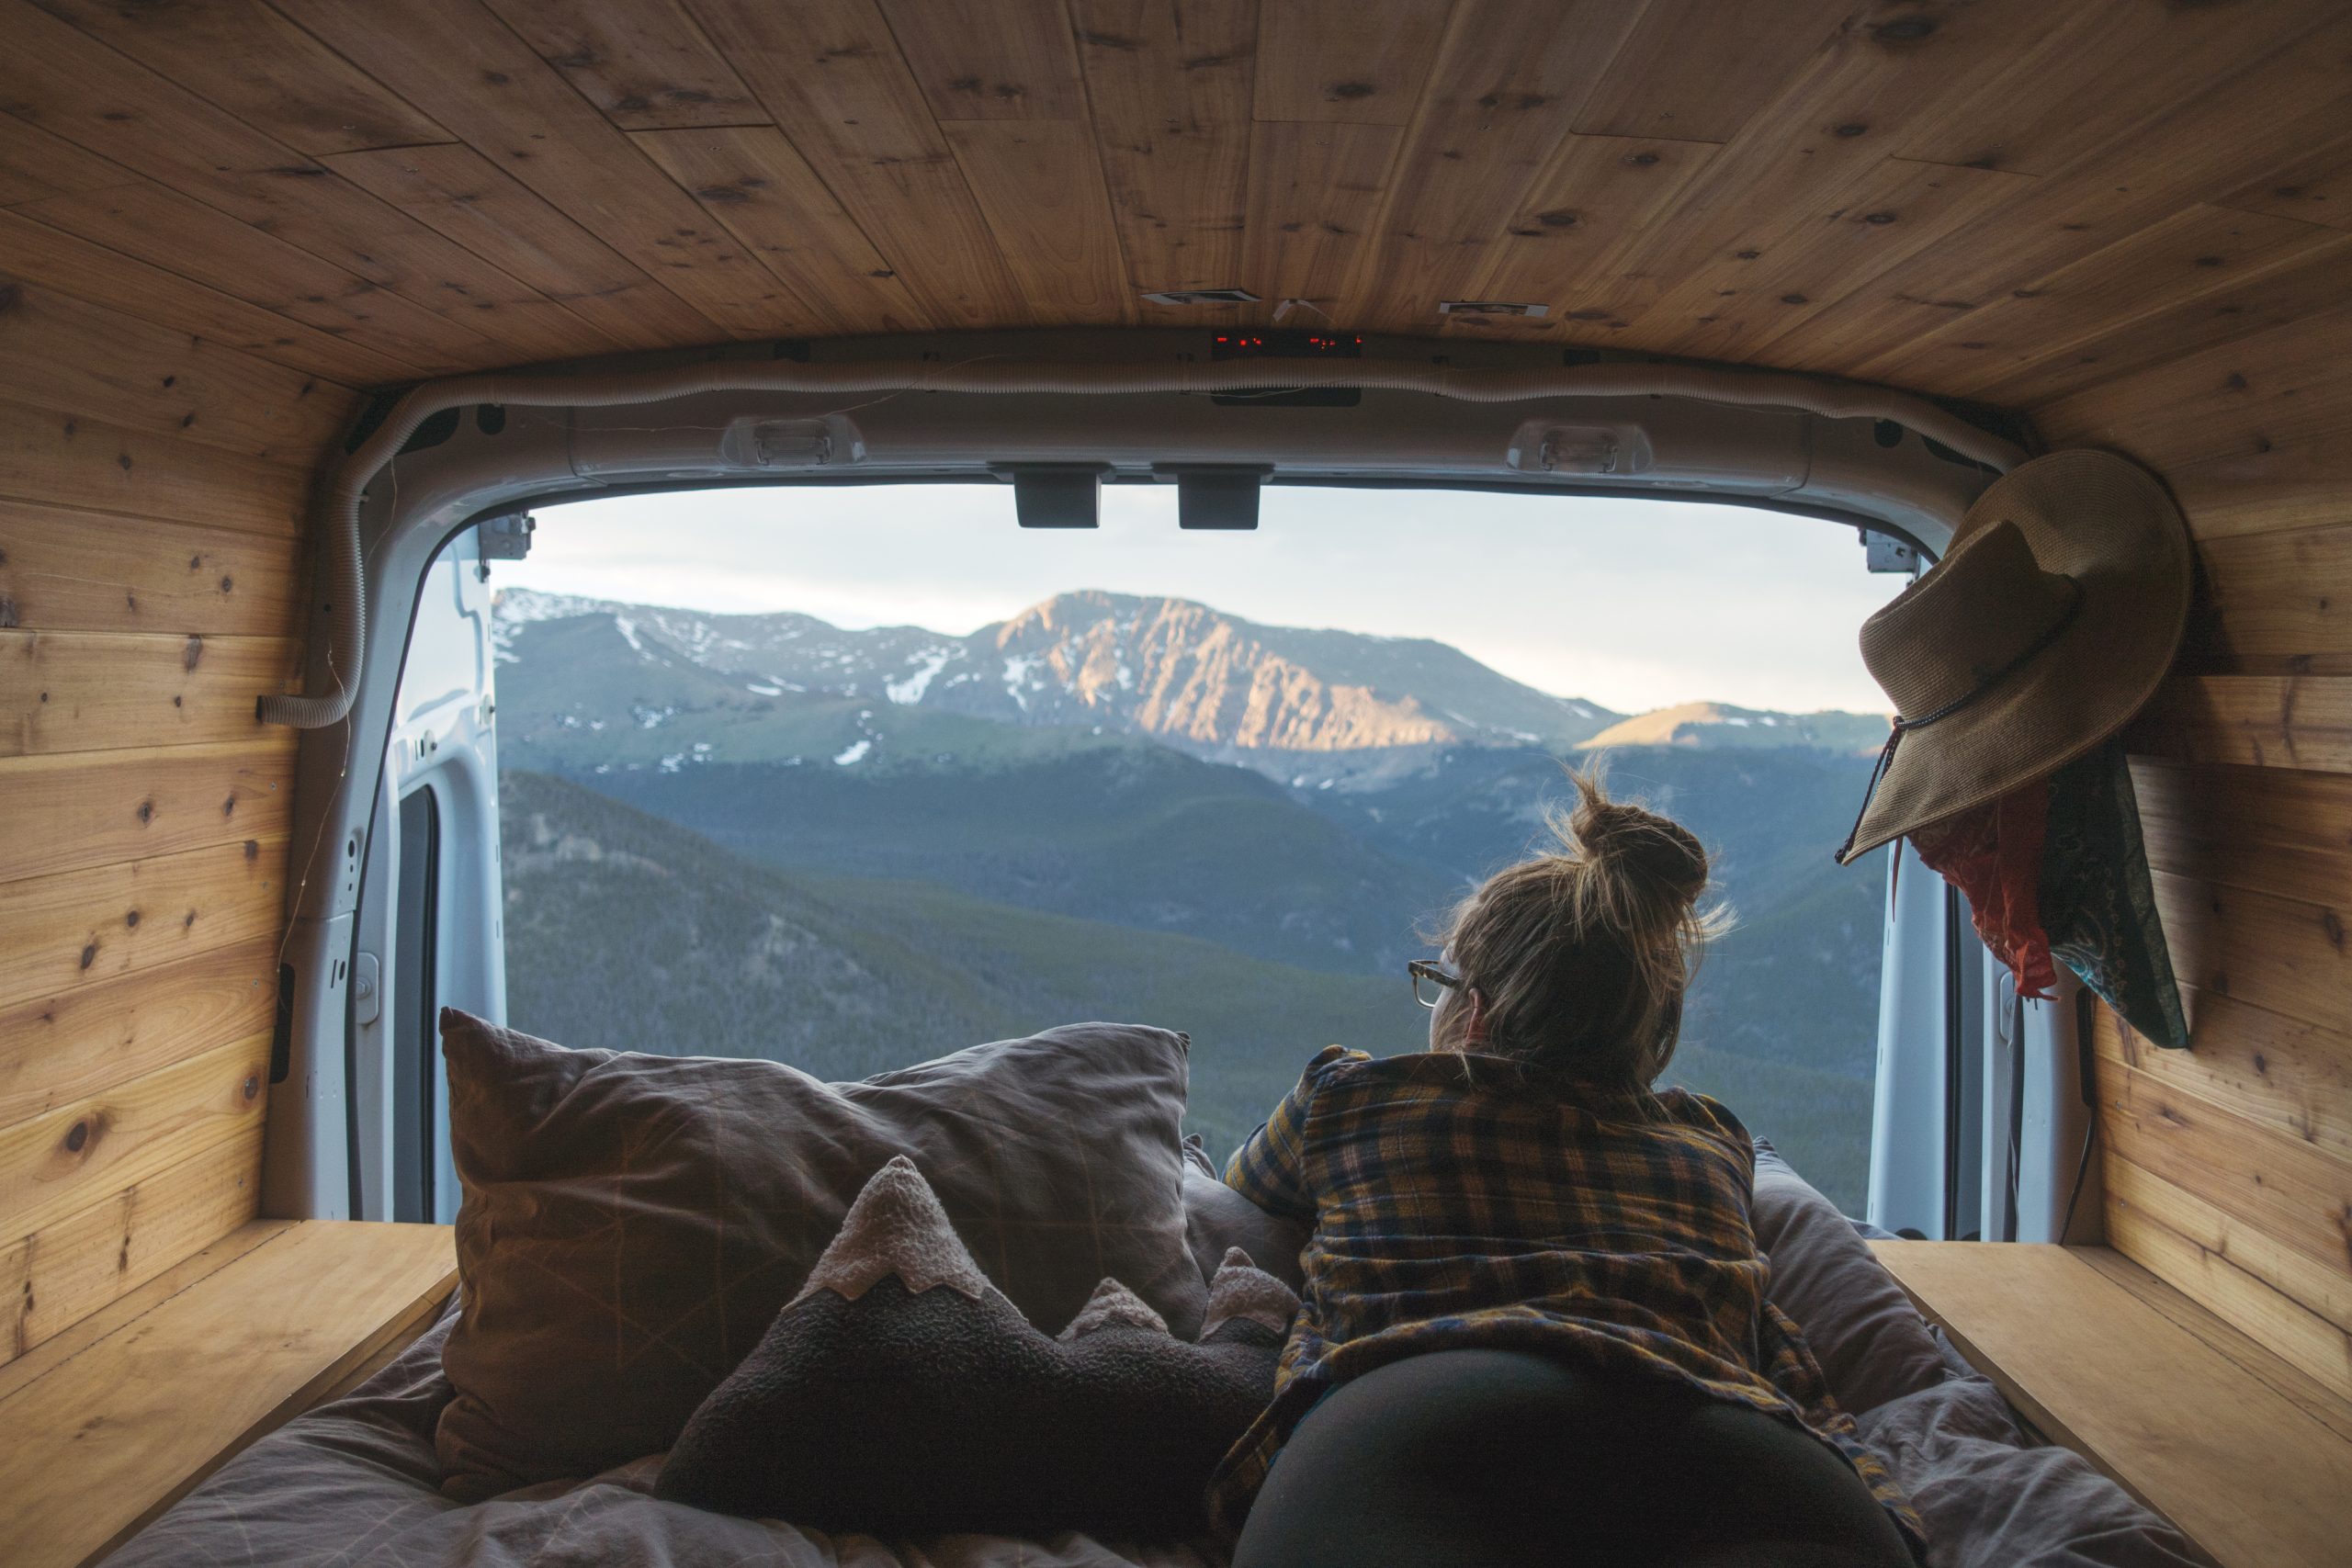 Overlooking a mountain from a camper van with pine interior - DIY camper van